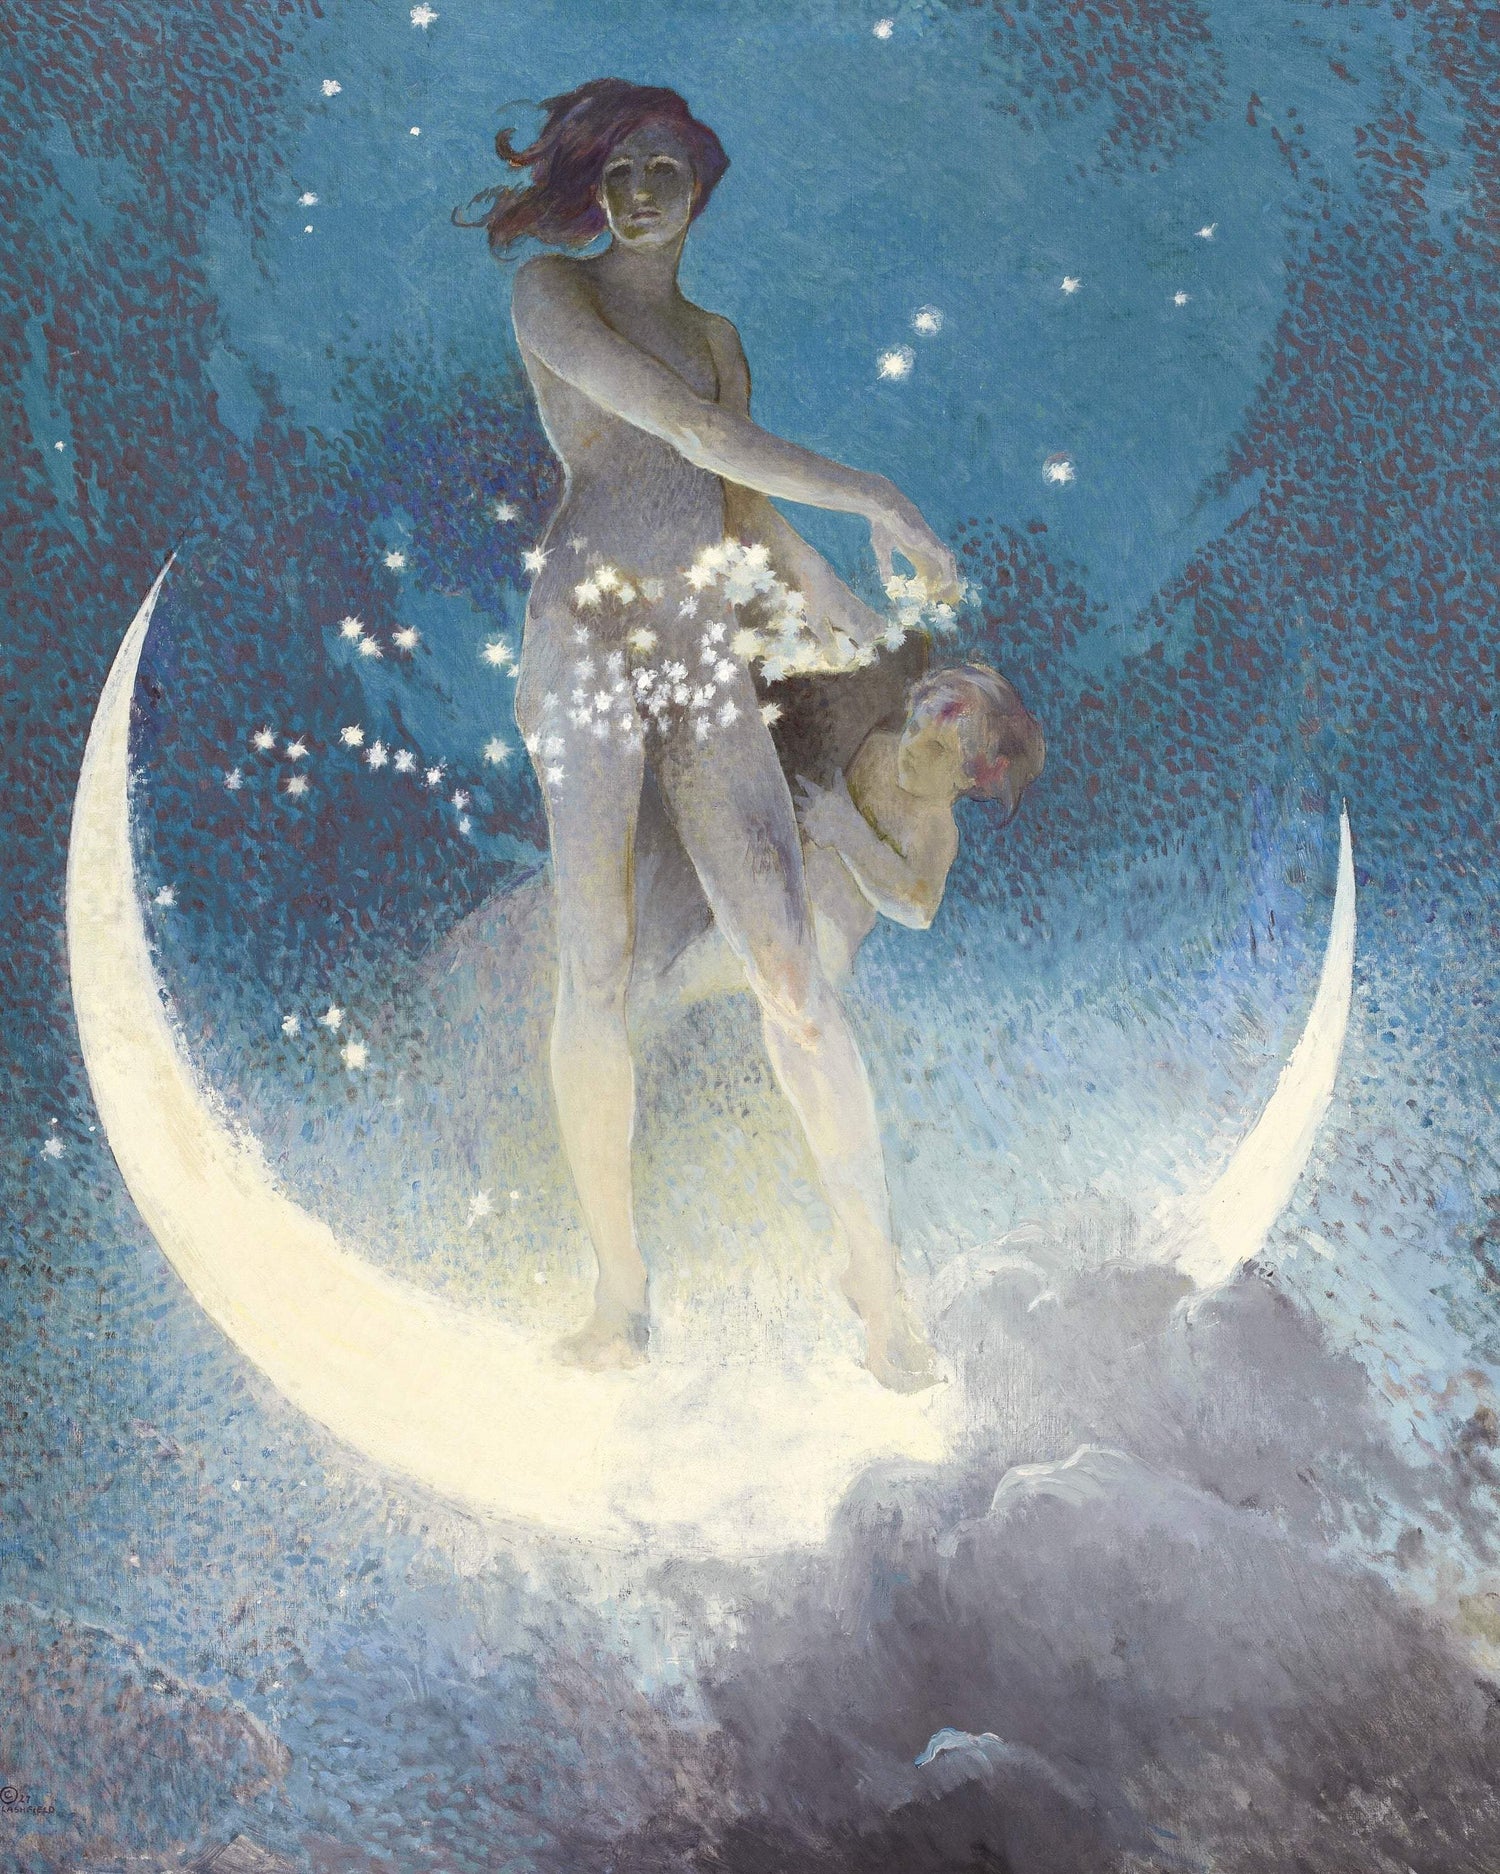 Moon Fairies - Artist by Renewed Spirit Home - Art Prints, Decoupage Rice Paper, Flat Canvas Prints, Giclee Prints, Photo Prints, Poster Prints